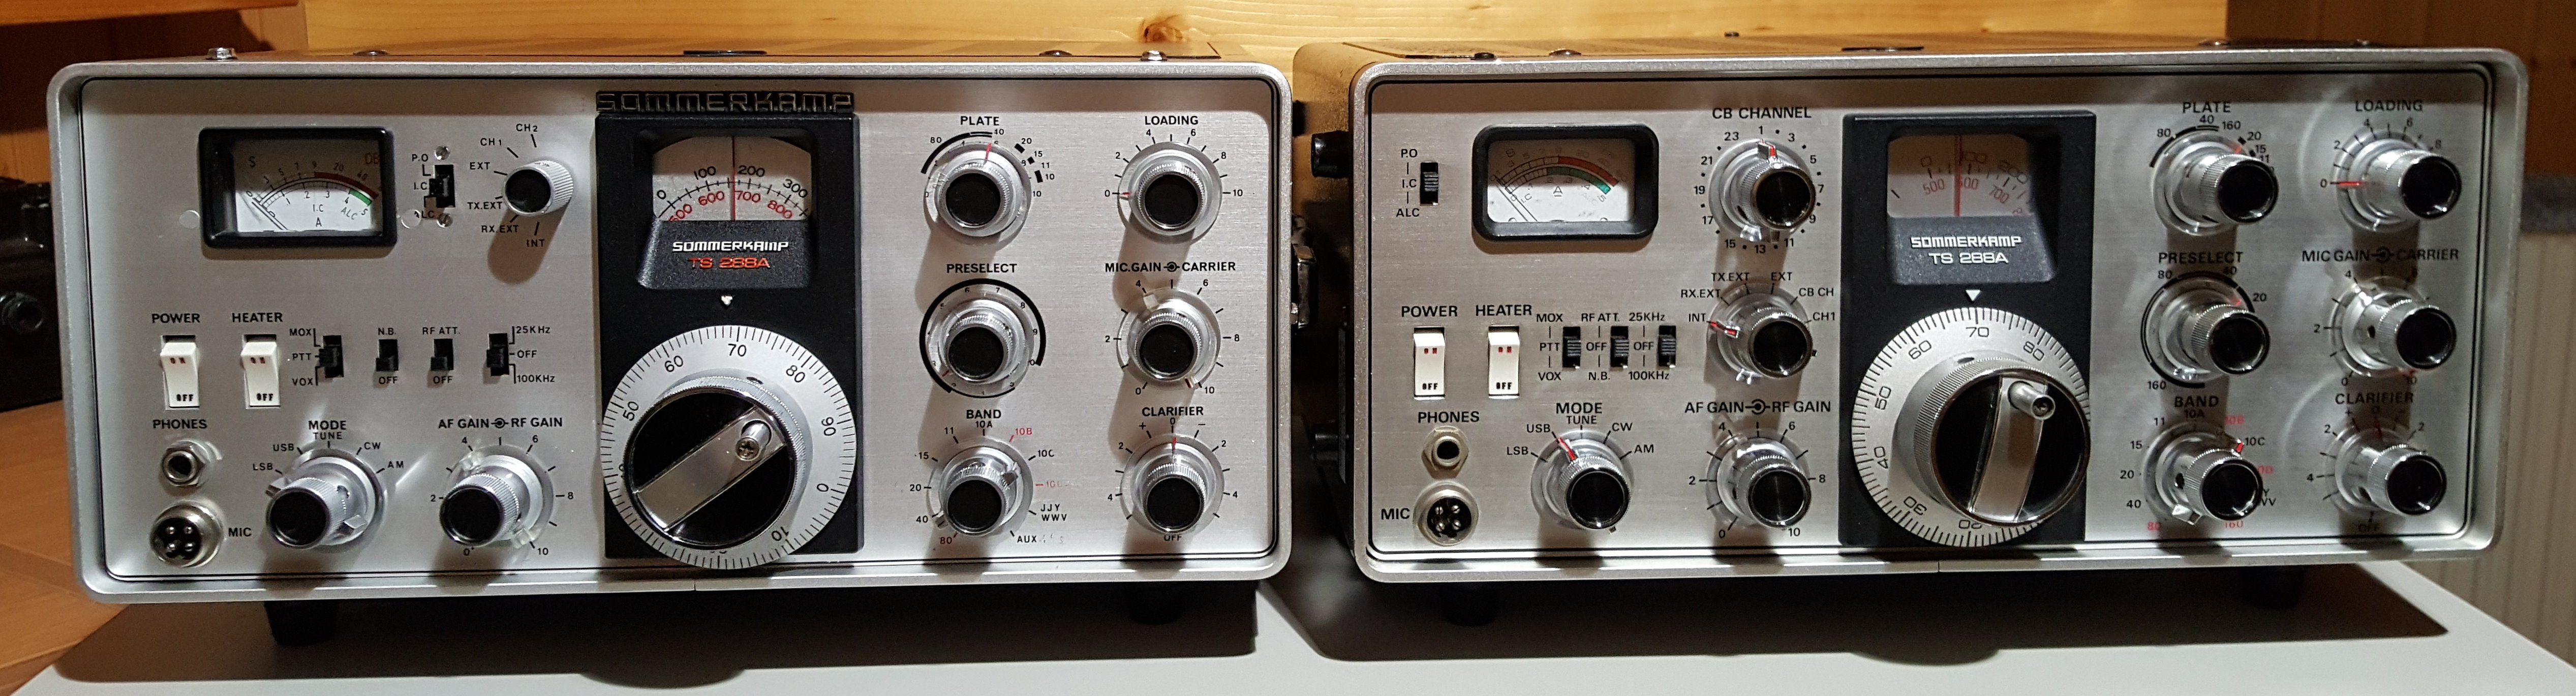 TS-288A beide Geräte